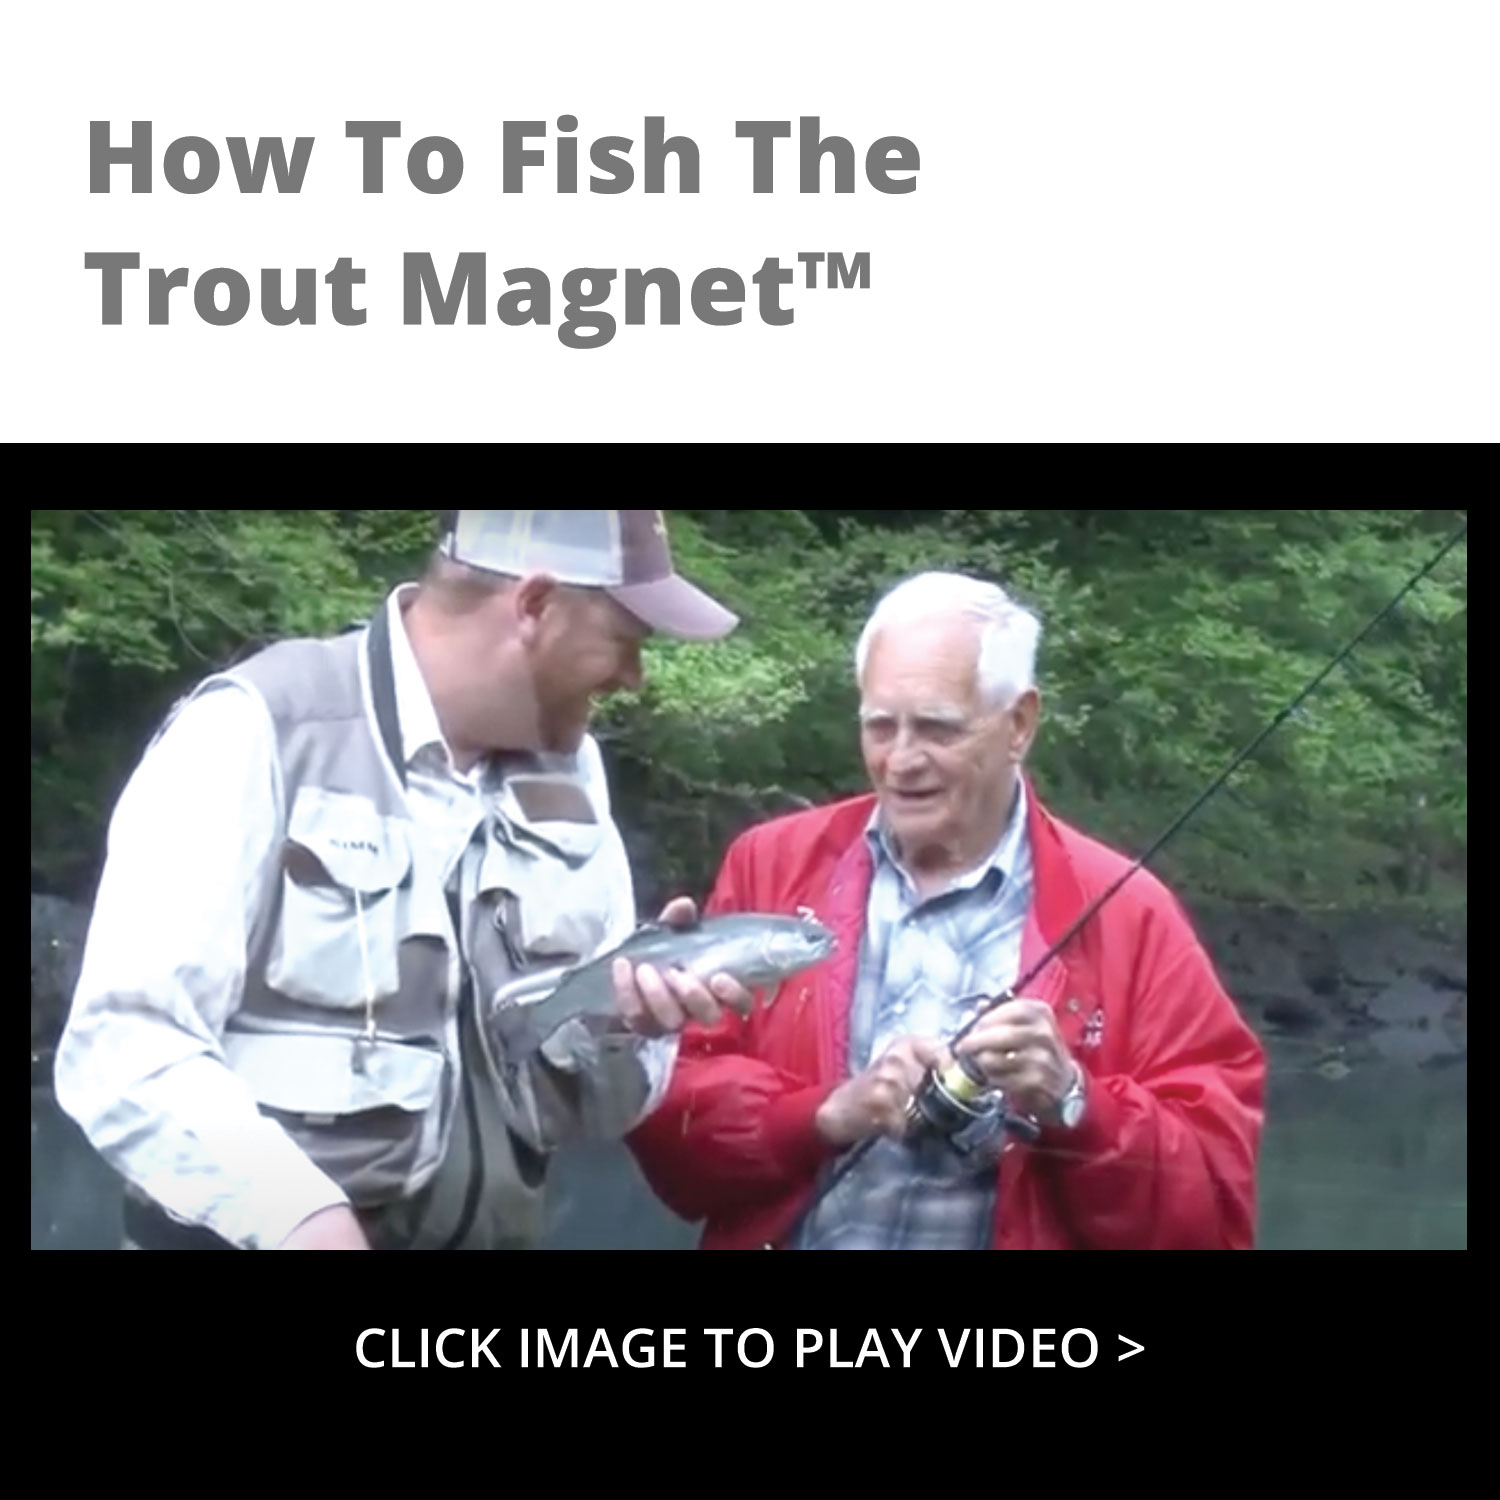 Trout Magnet Jig Heads - TROUT MAGNET